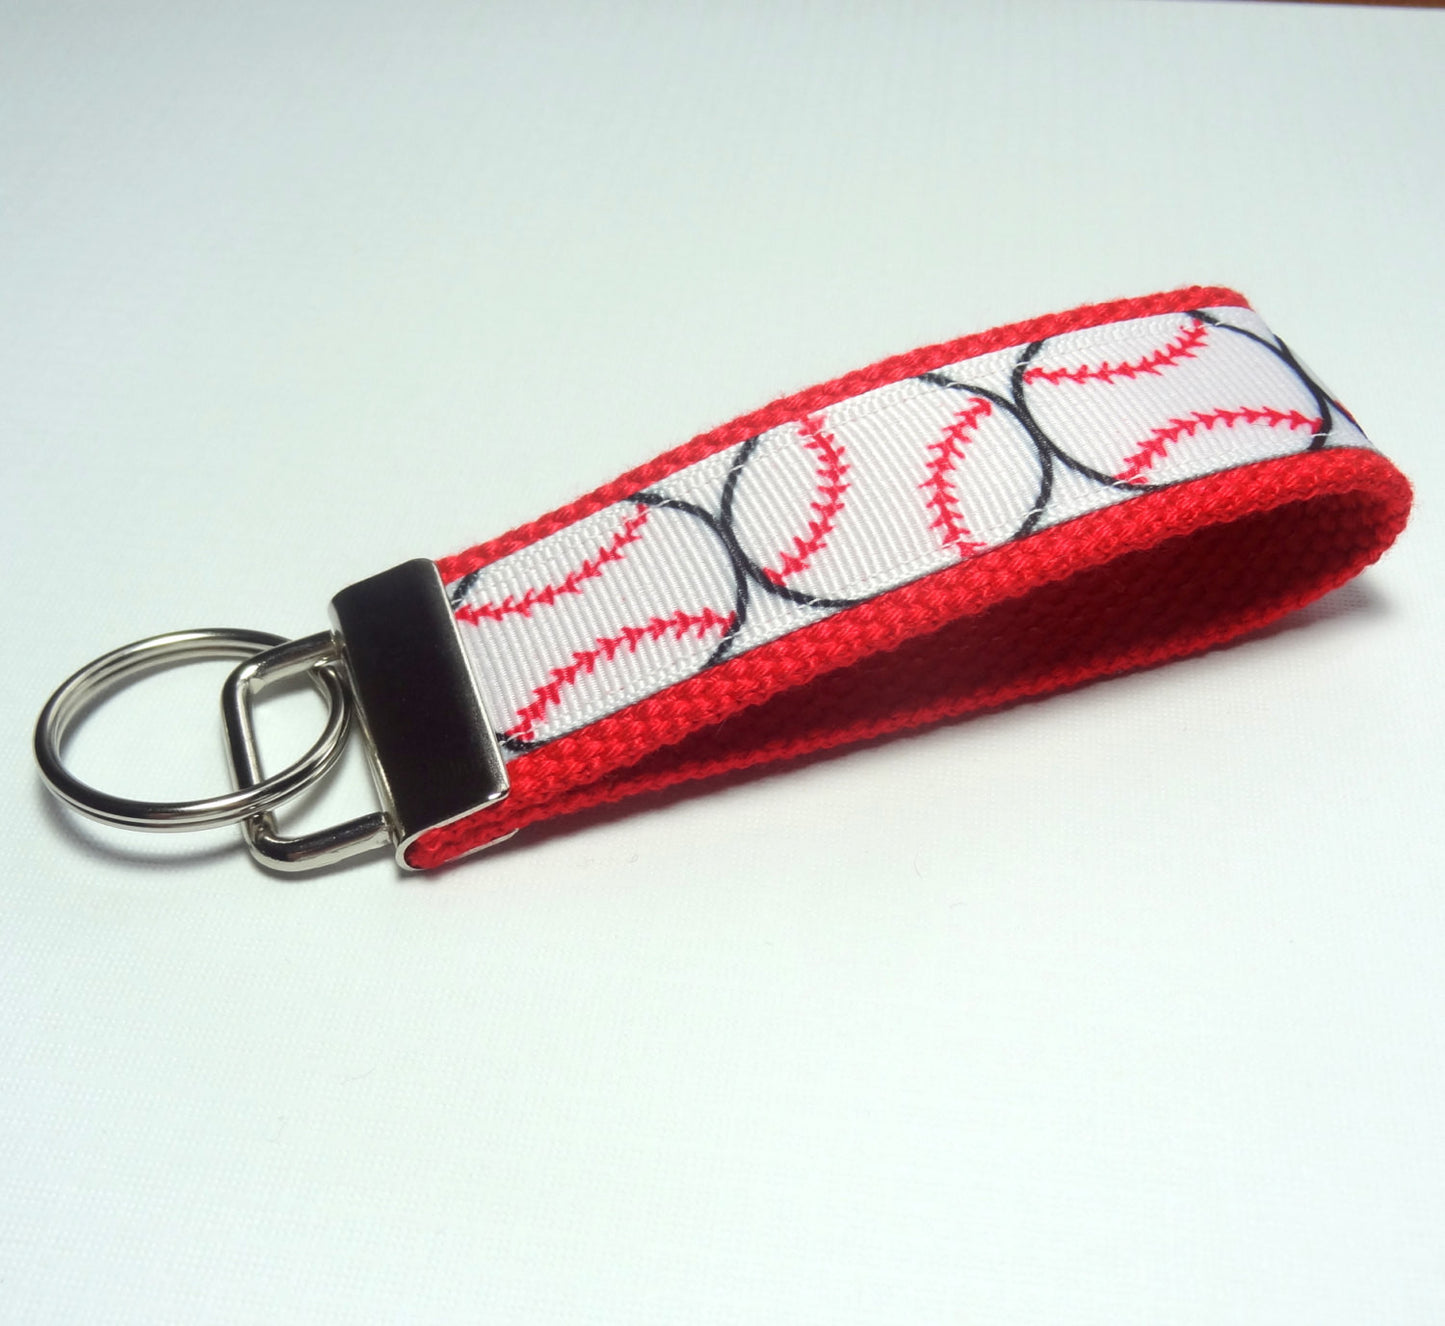 Key Fob (Medium): Red and White Baseball or Softball Themed Key Fob Key Chain